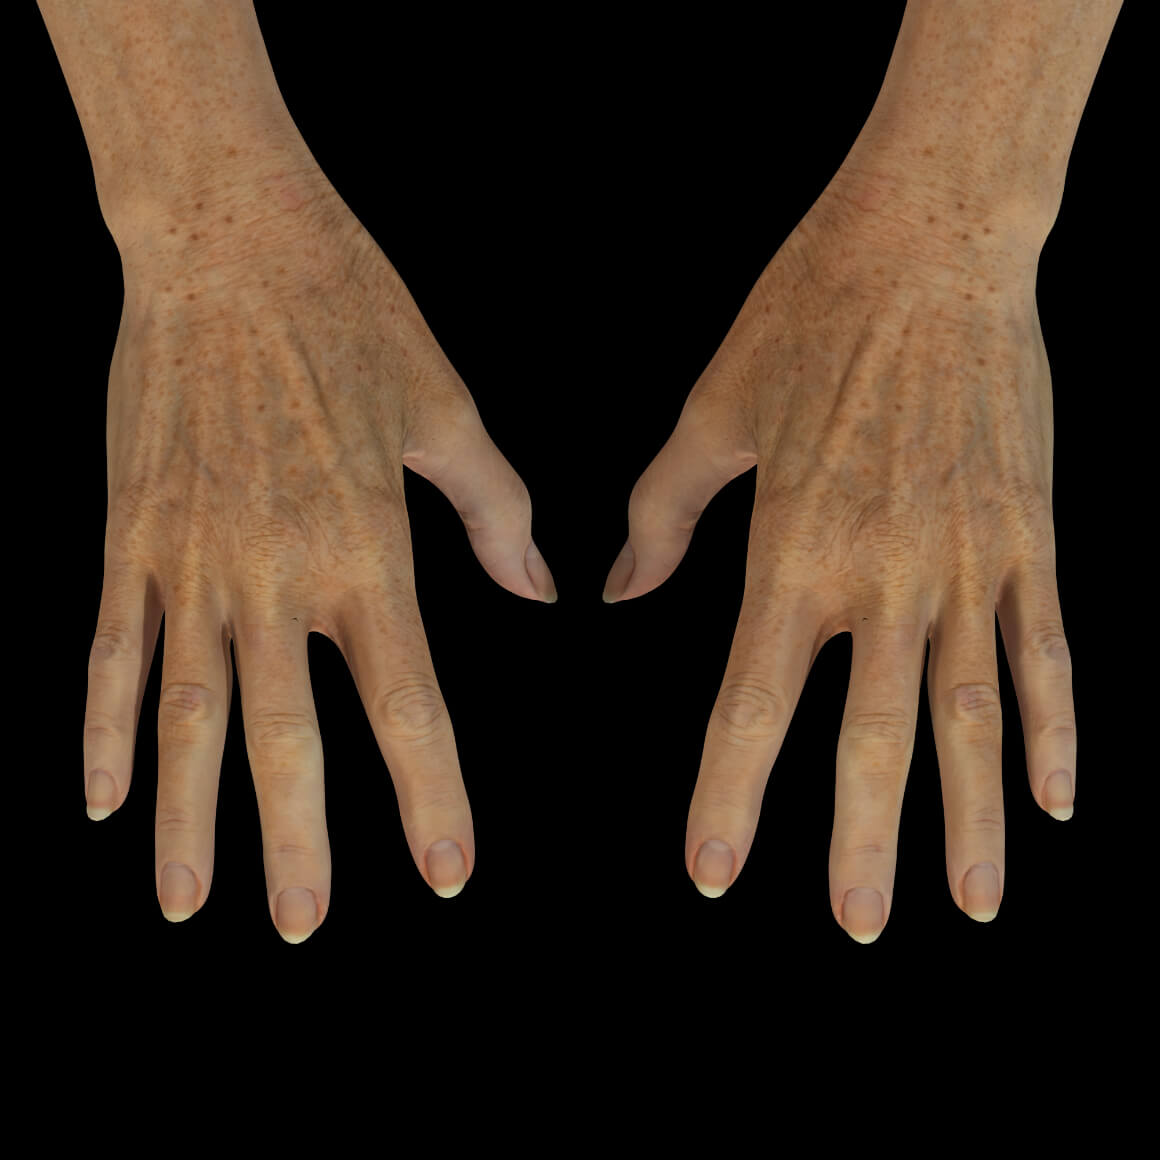 Hands of a Clinique Chloé female patient showing pigmented lesions